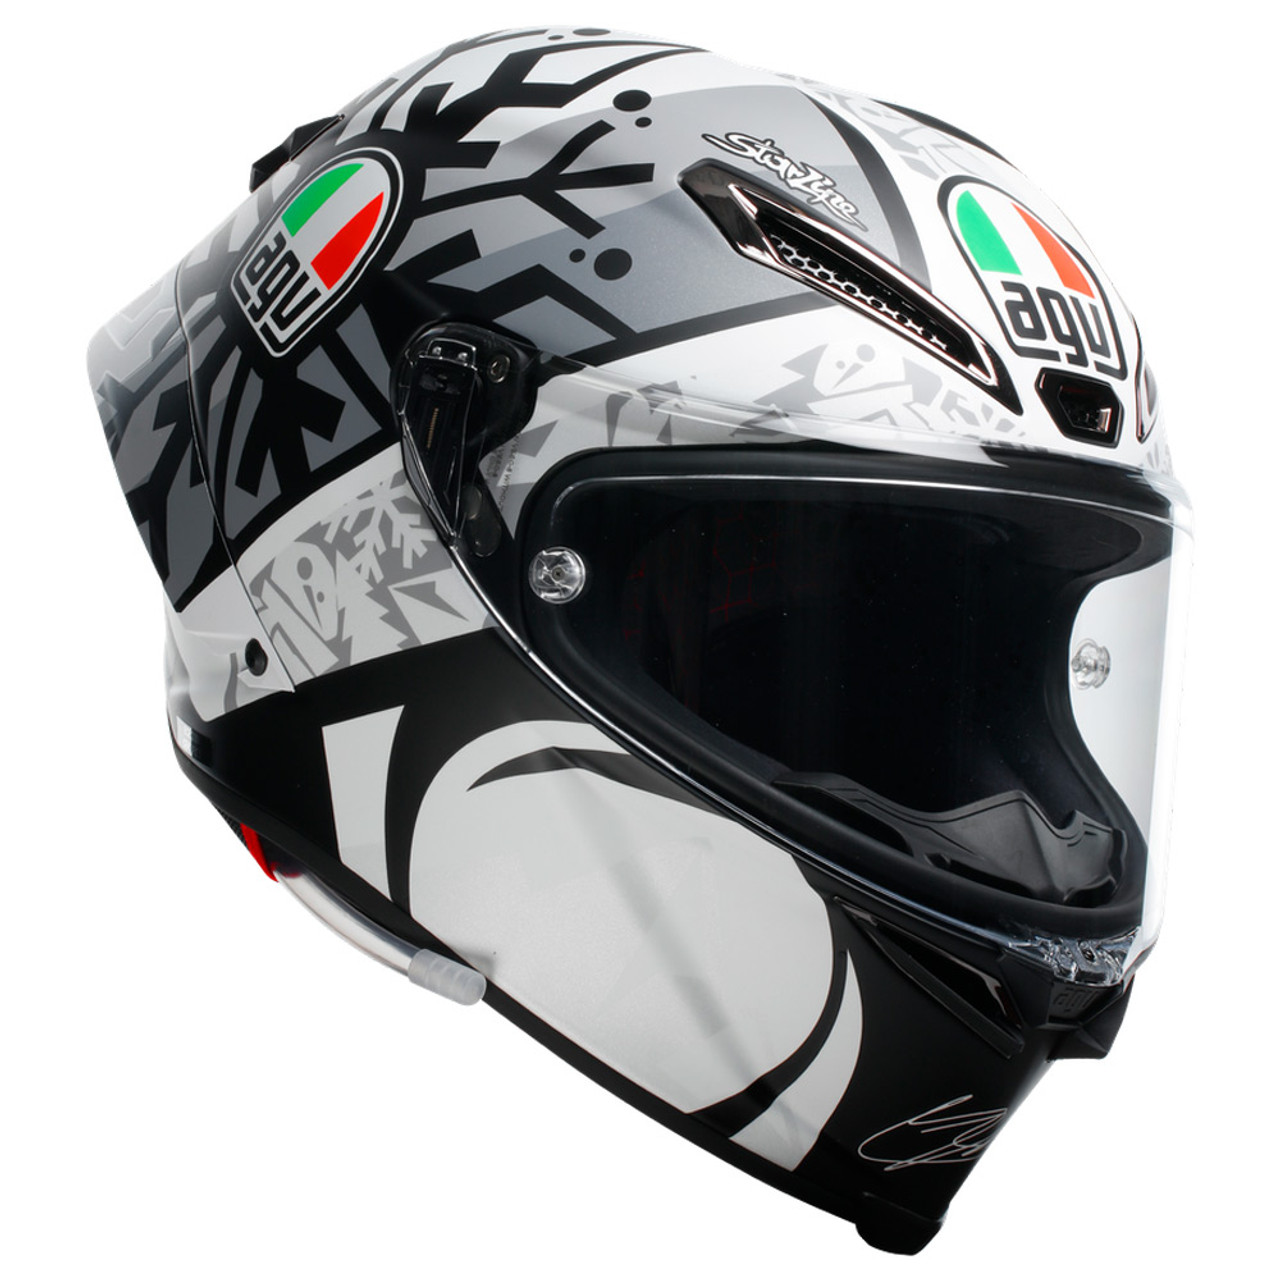 AGV Pista GP RR Limited Edition Mir Winter Test Helmet - Sportbike